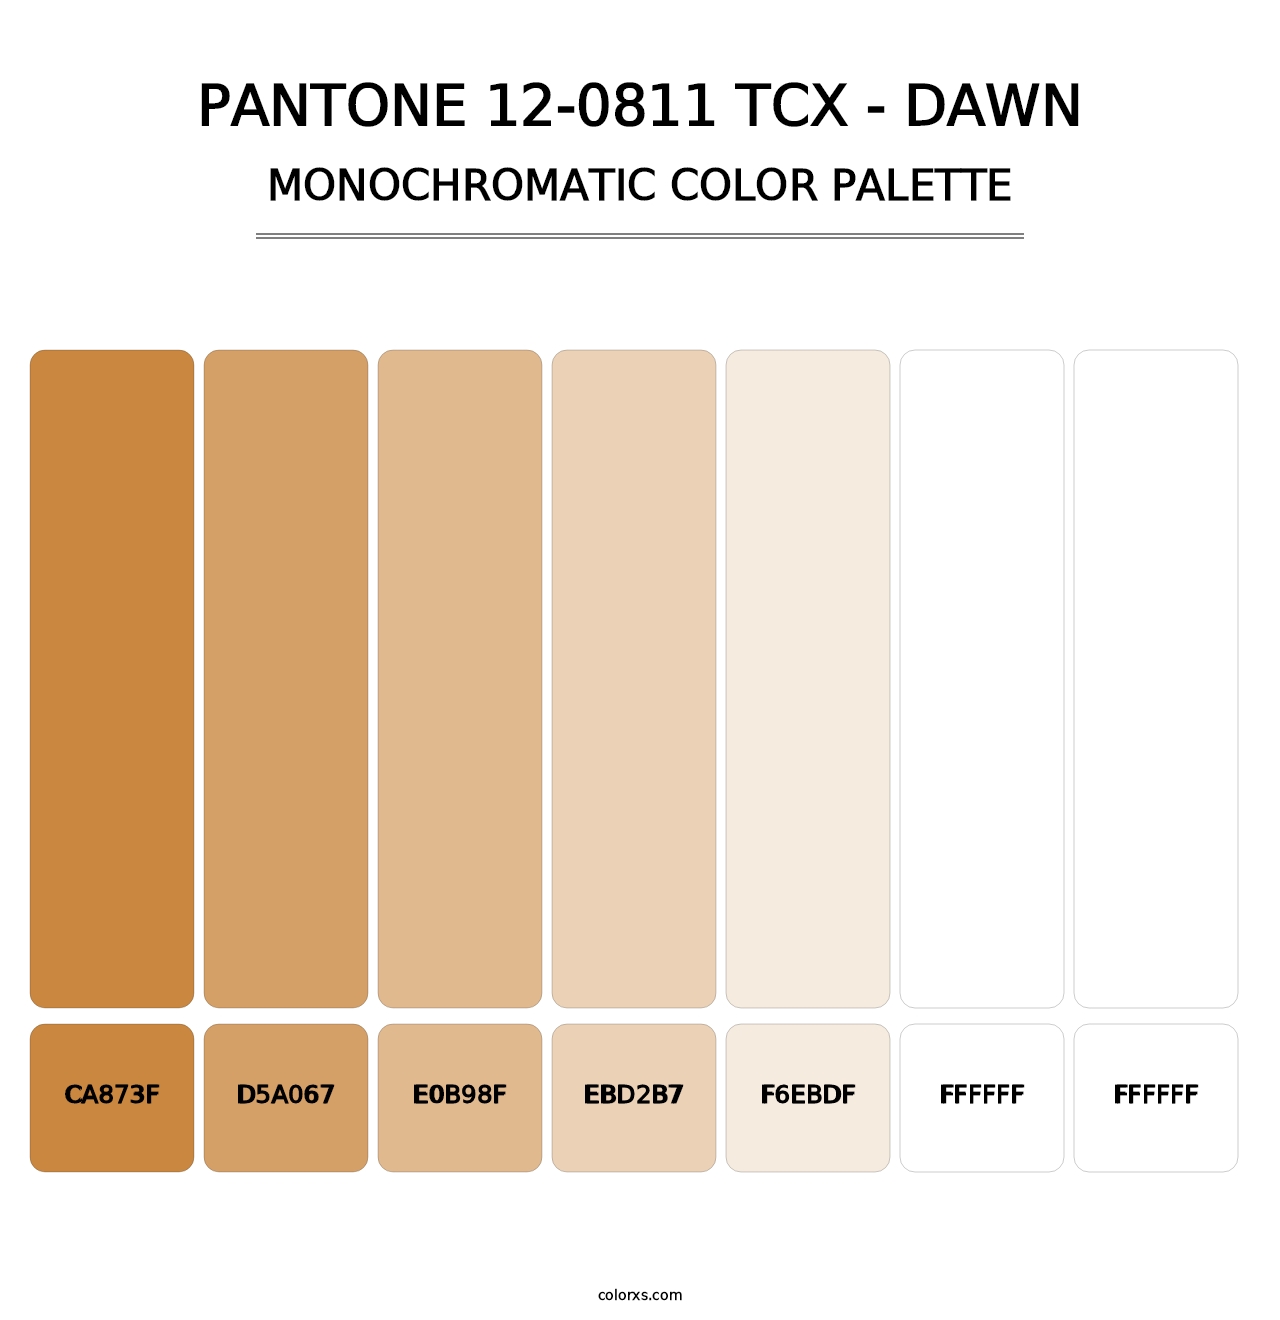 PANTONE 12-0811 TCX - Dawn - Monochromatic Color Palette